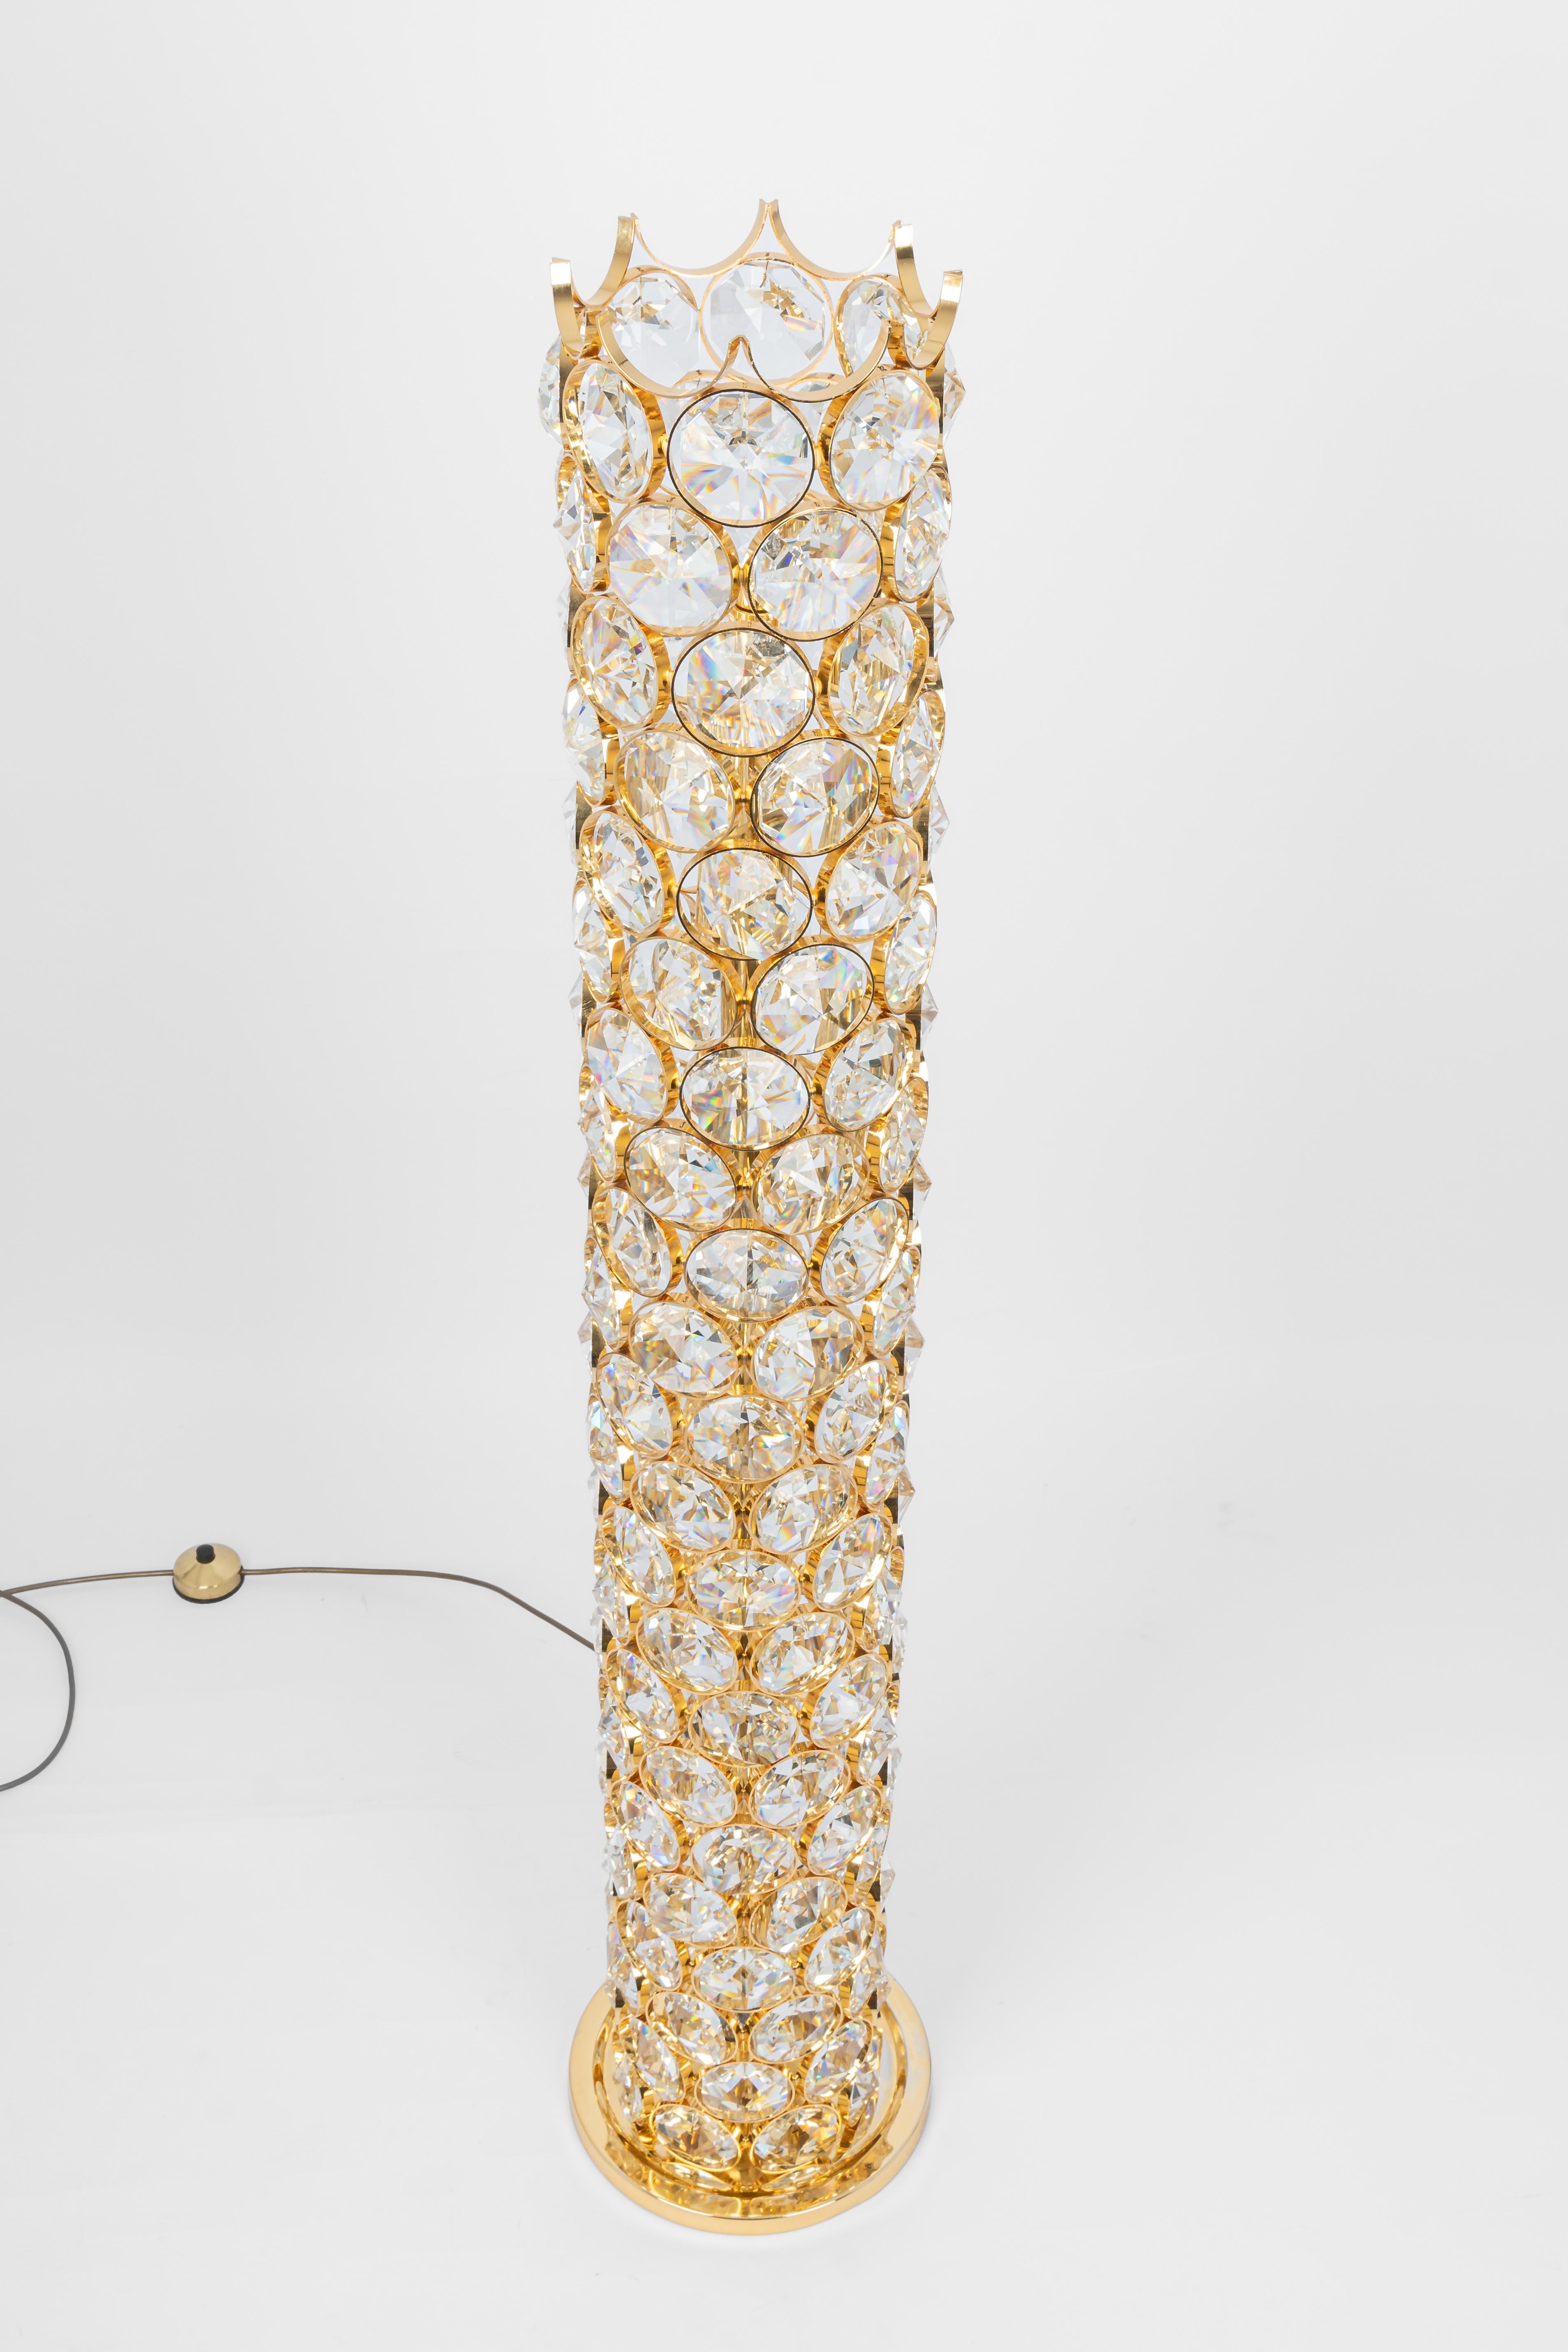 Mid-Century Modern Exquisite Gilt Jewel Floor Lamp Sciolari Design by Palwa, Germany, 1960s For Sale